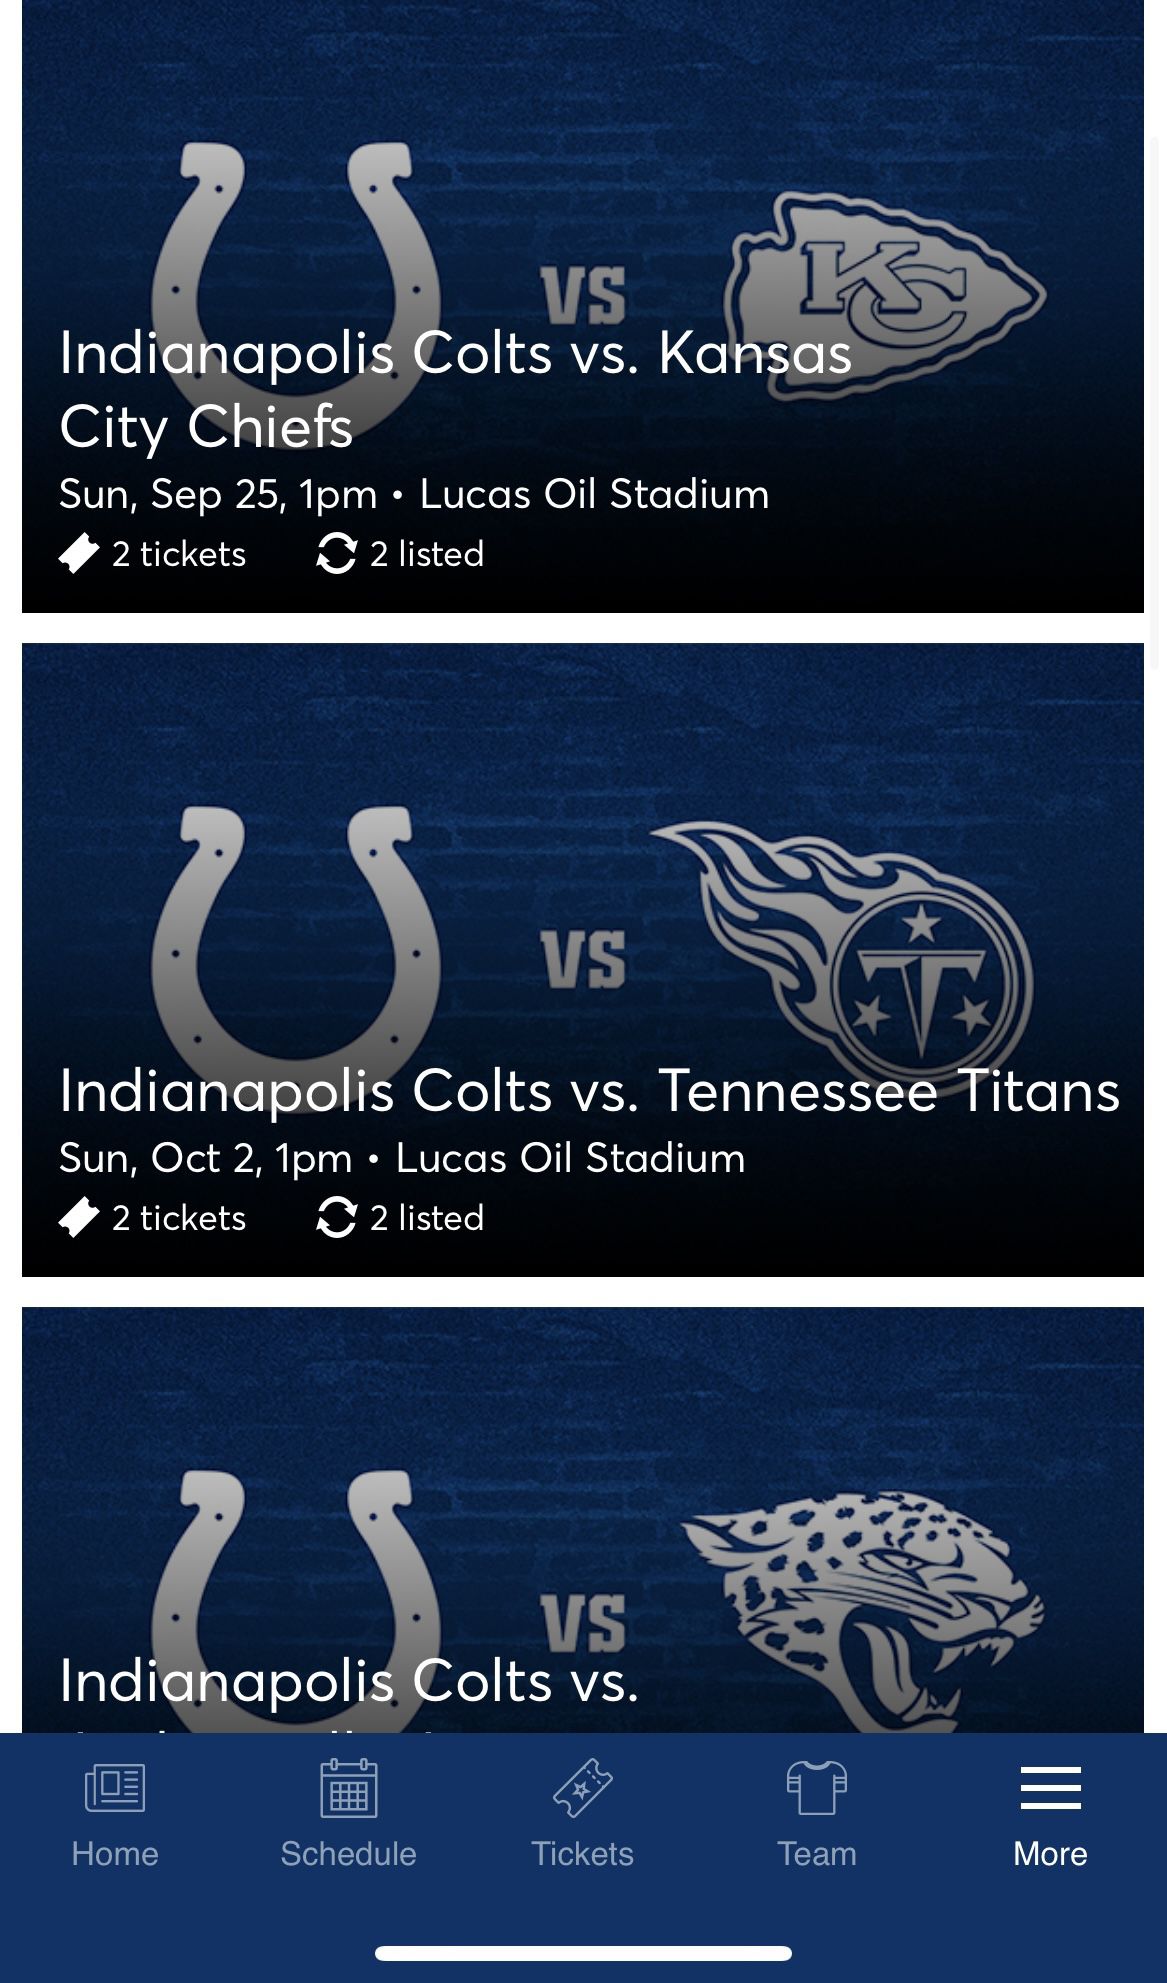 Indianapolis Colts season tickets